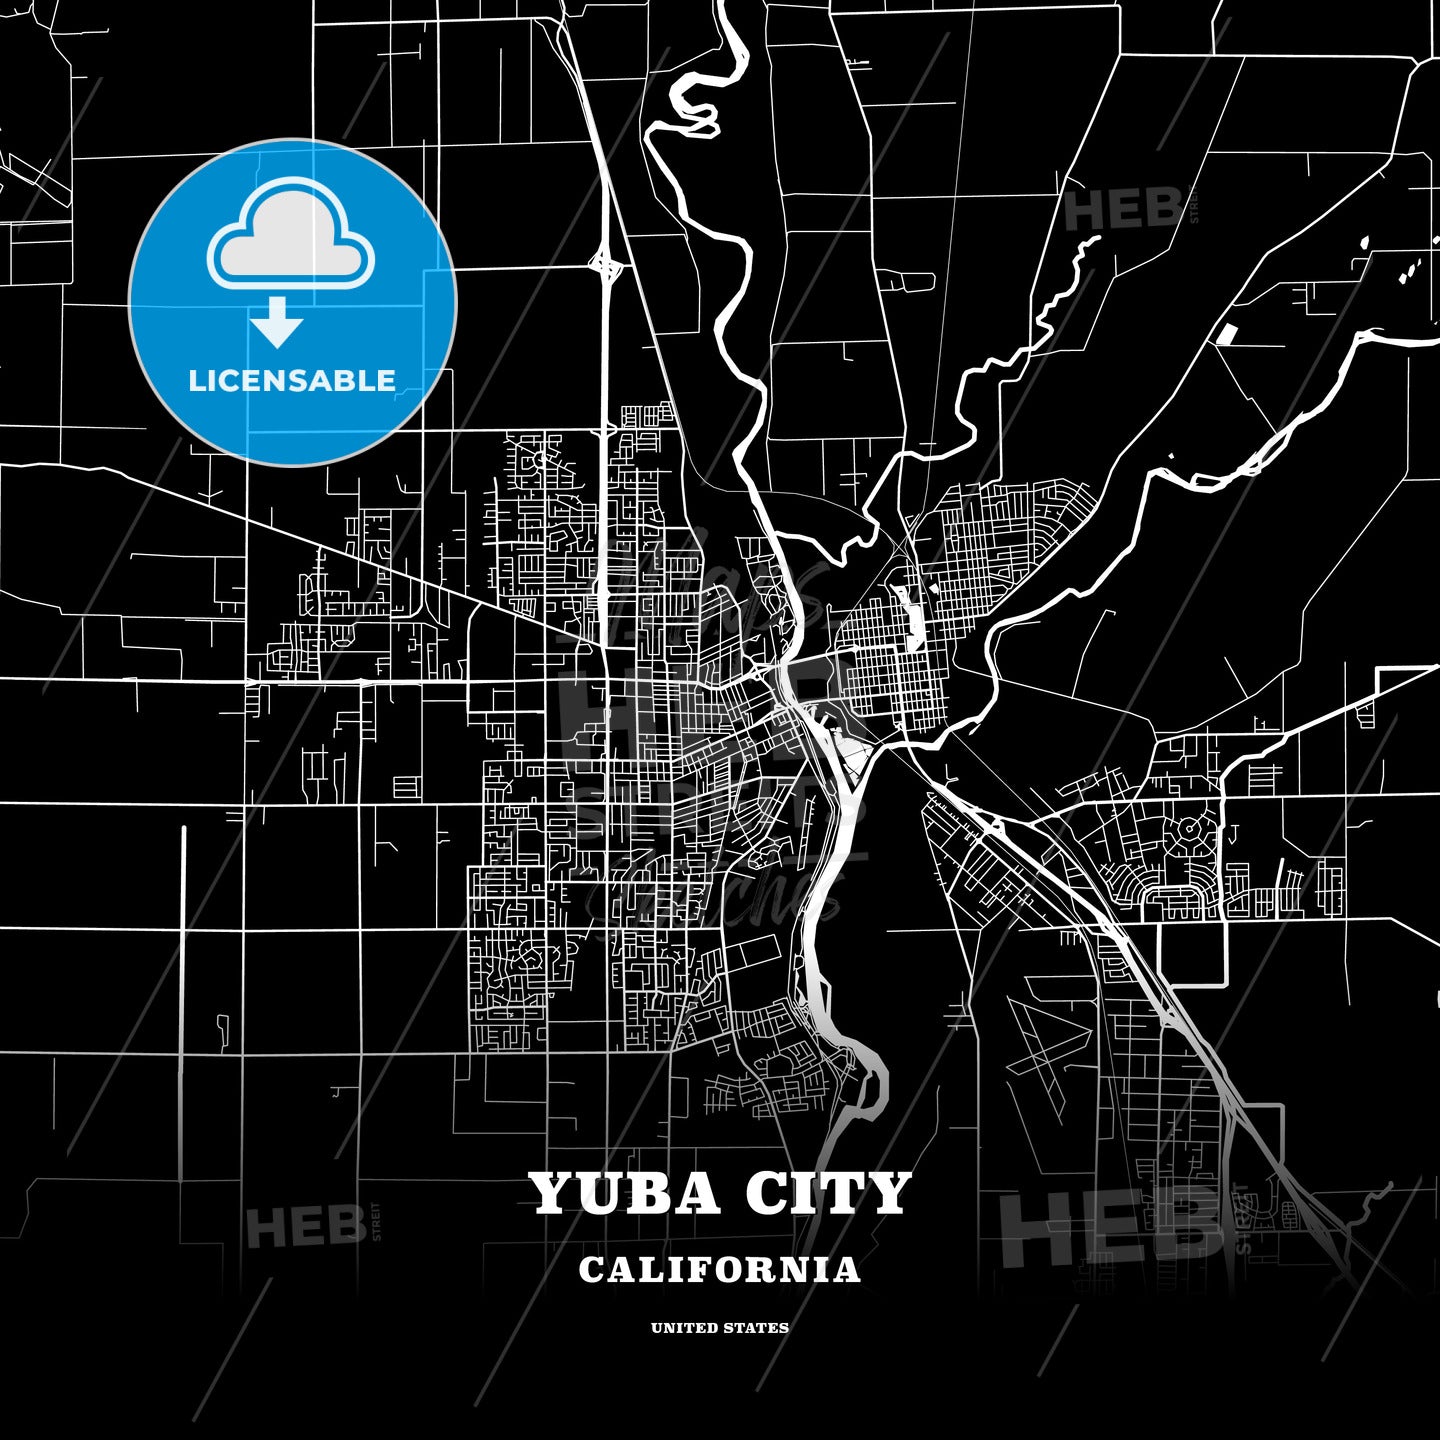 Yuba City, California, USA map